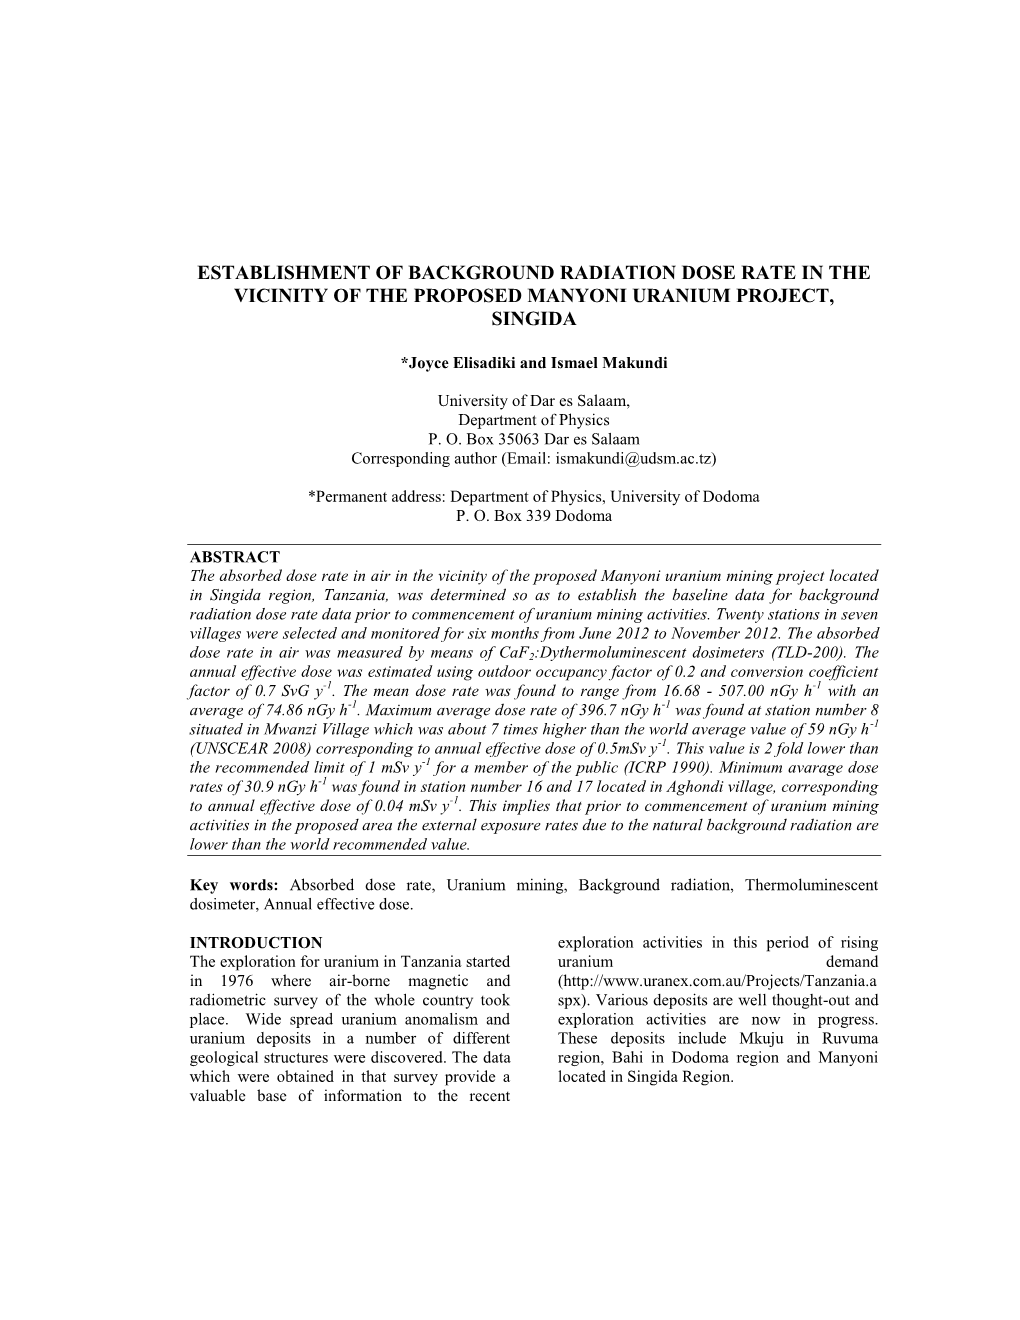 Establishment of Background Radiation Dose Rate in the Vicinity of the Proposed Manyoni Uranium Project, Singida